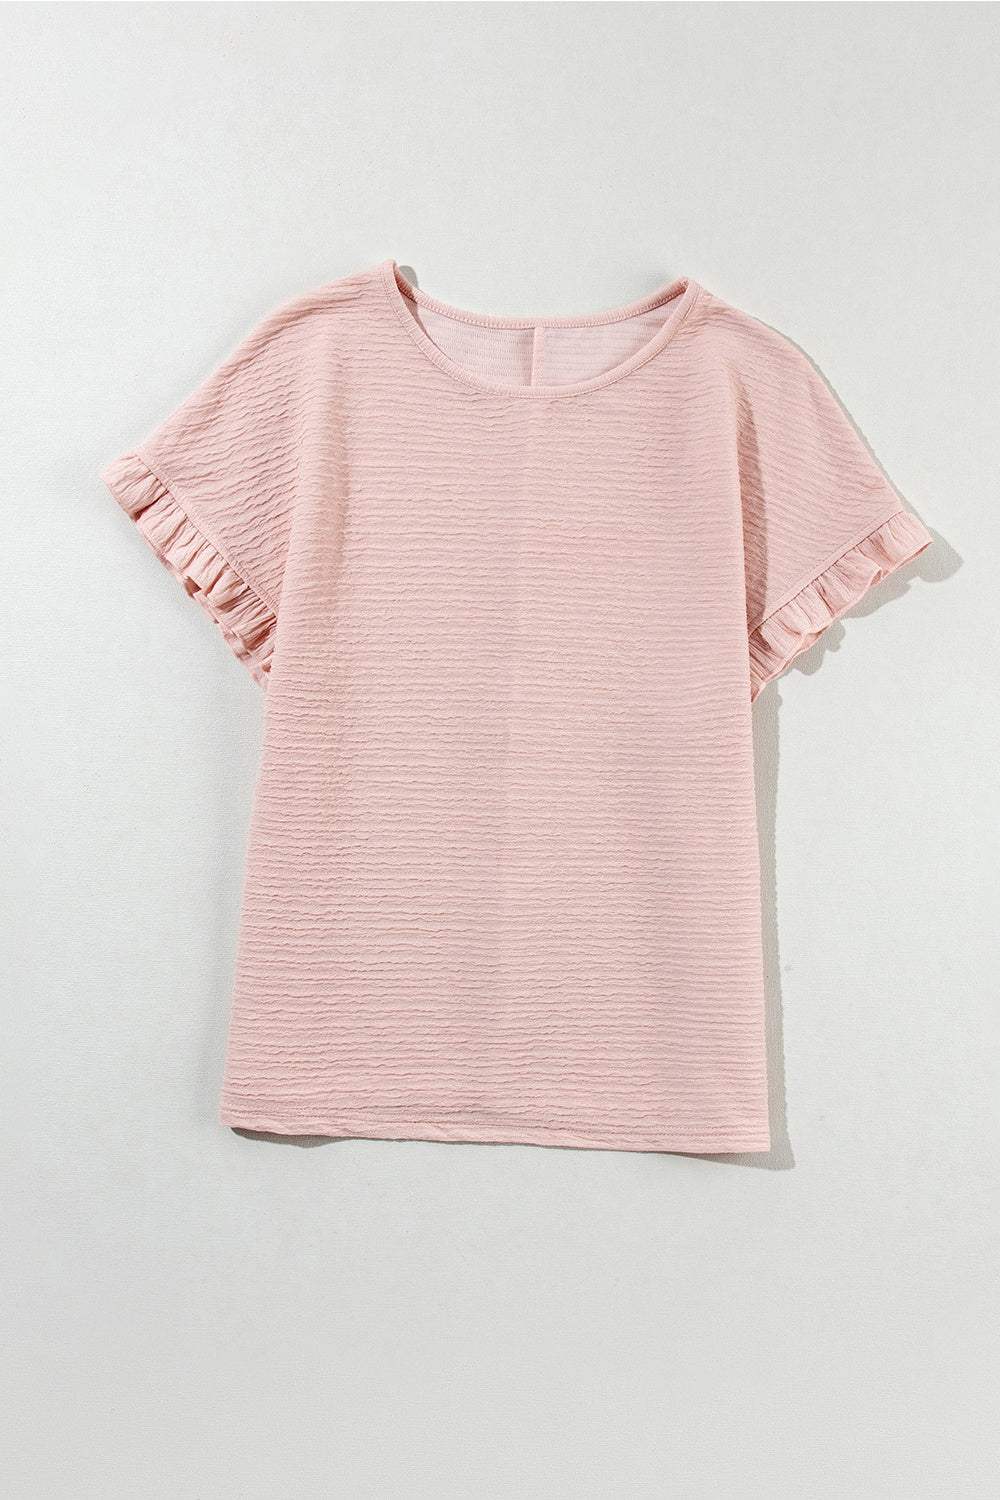 TEEK - Blush Pink Round Neck Frill Short Sleeve Top TOPS TEEK Trend   